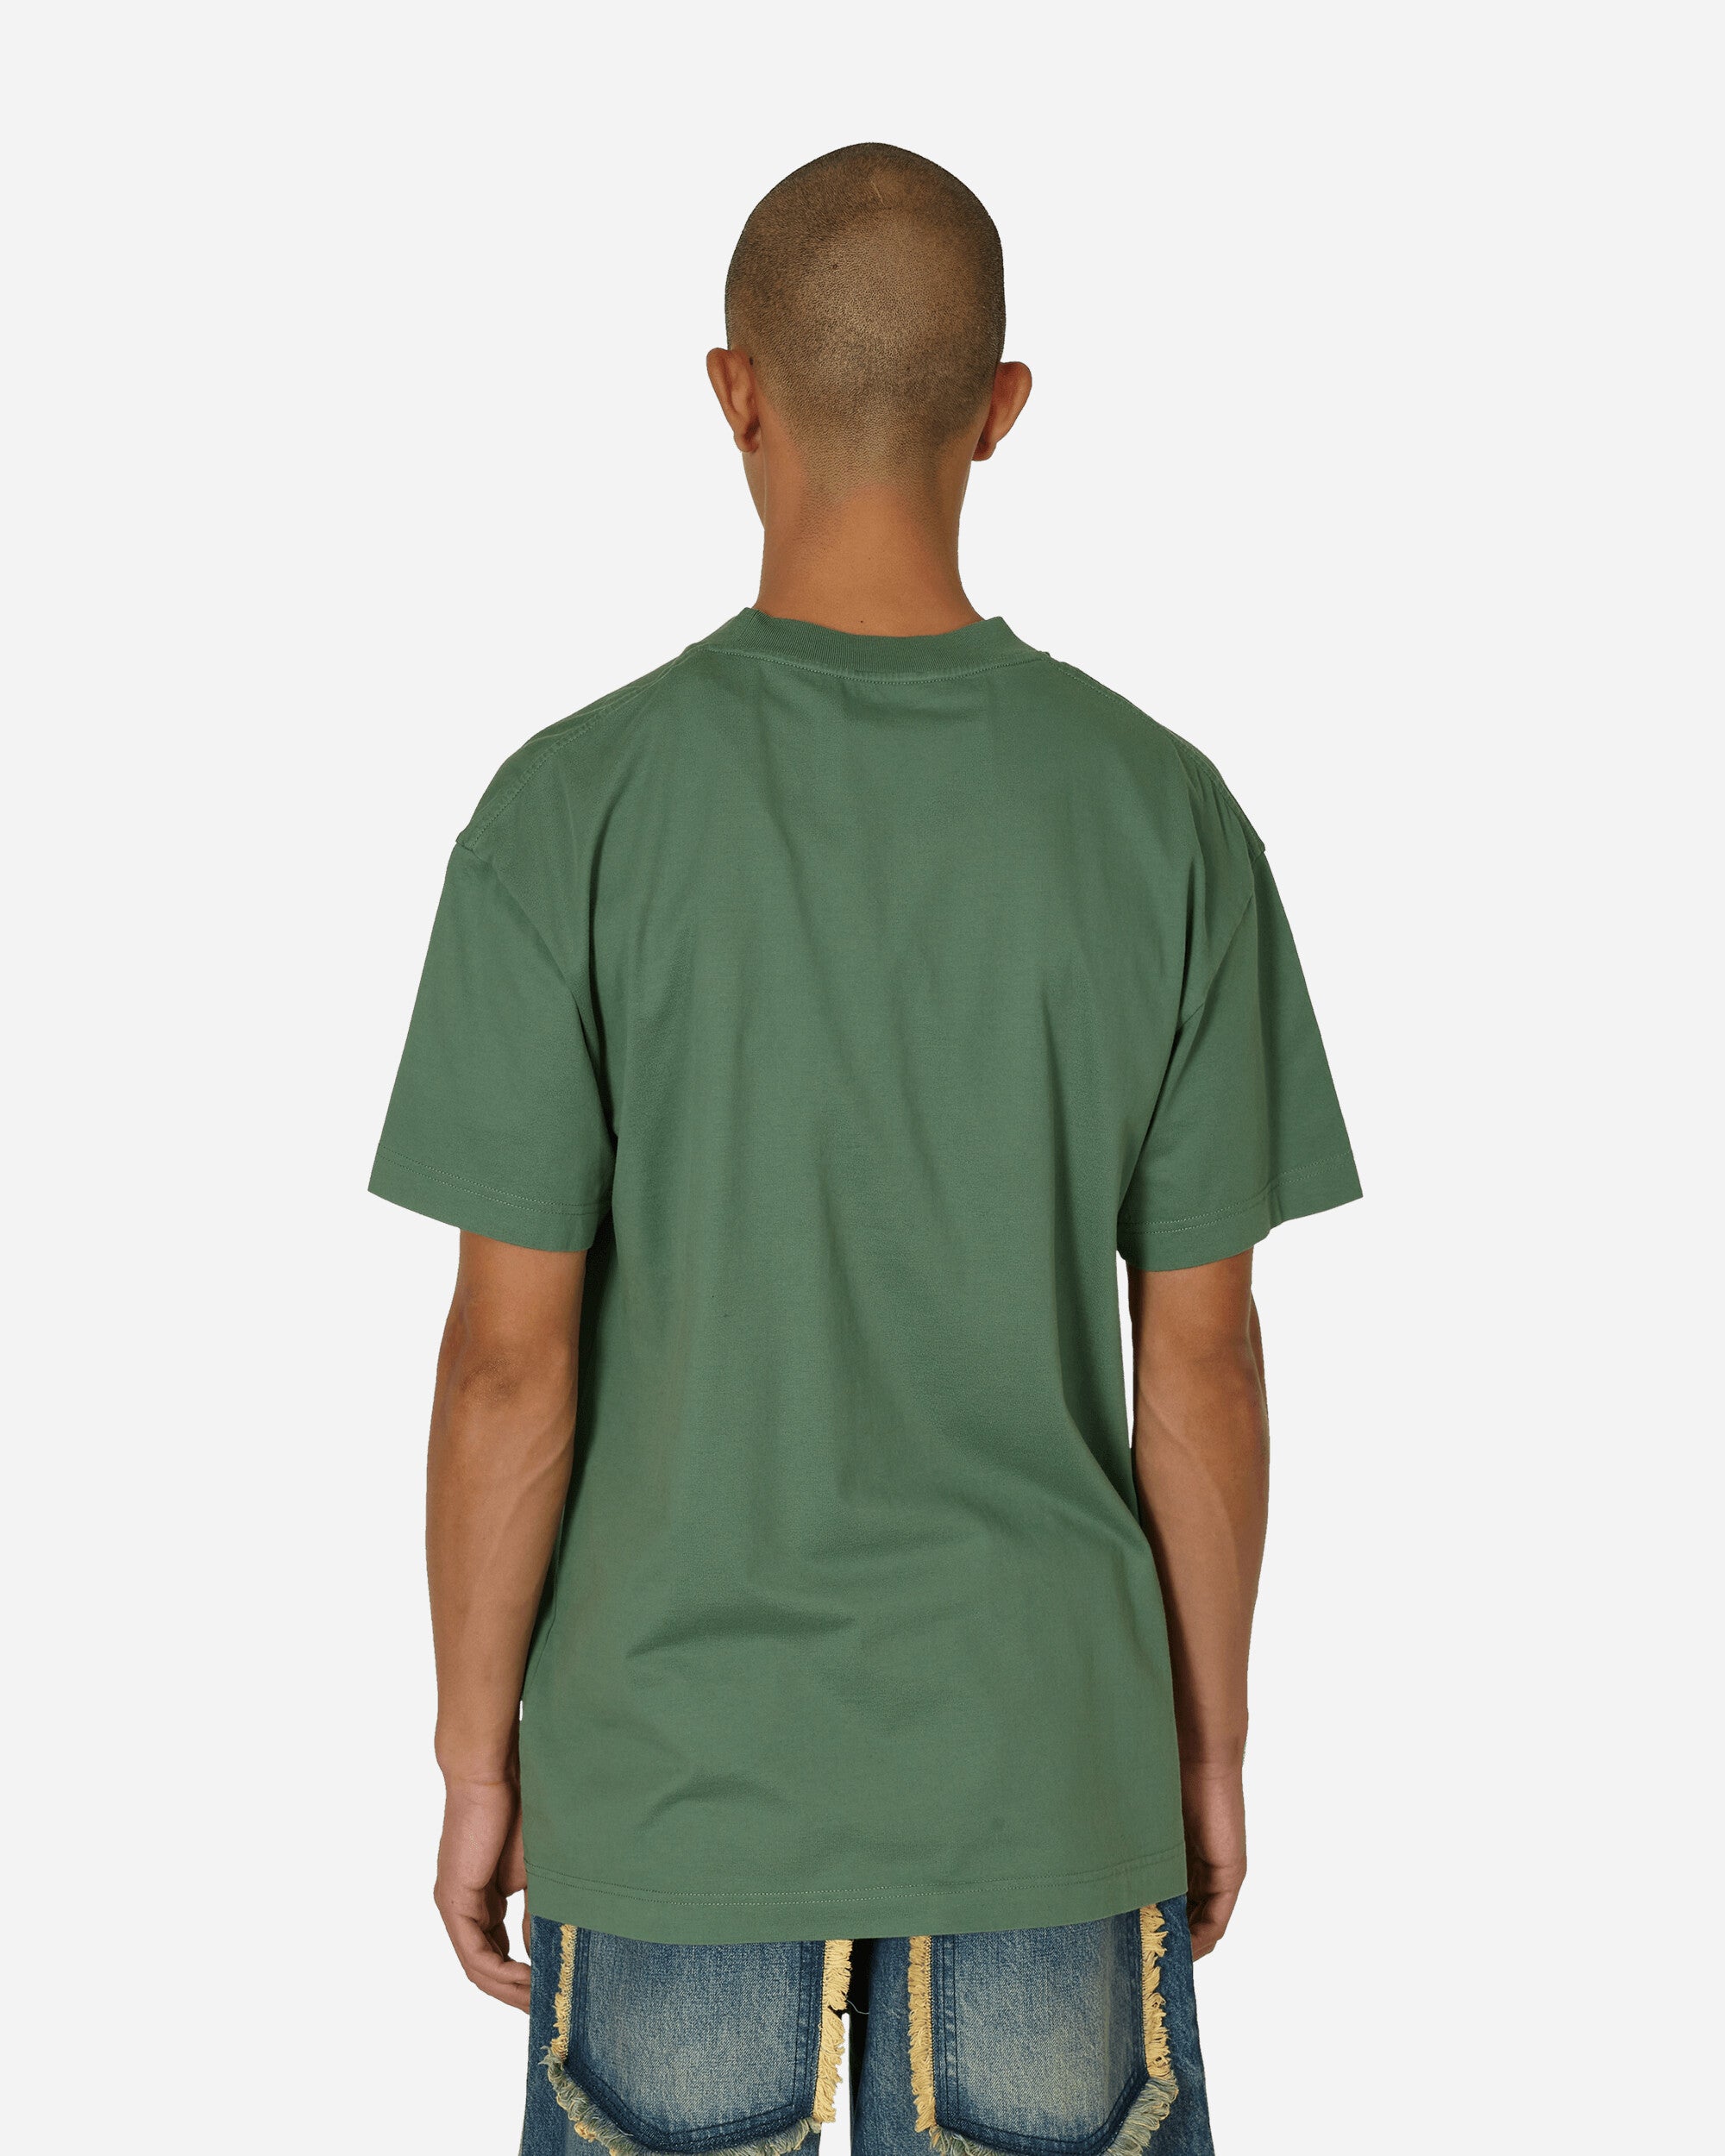 Moncler Genius T-Shirt X Palm Angels Green T-Shirts Shortsleeve 8C00003M3568 855